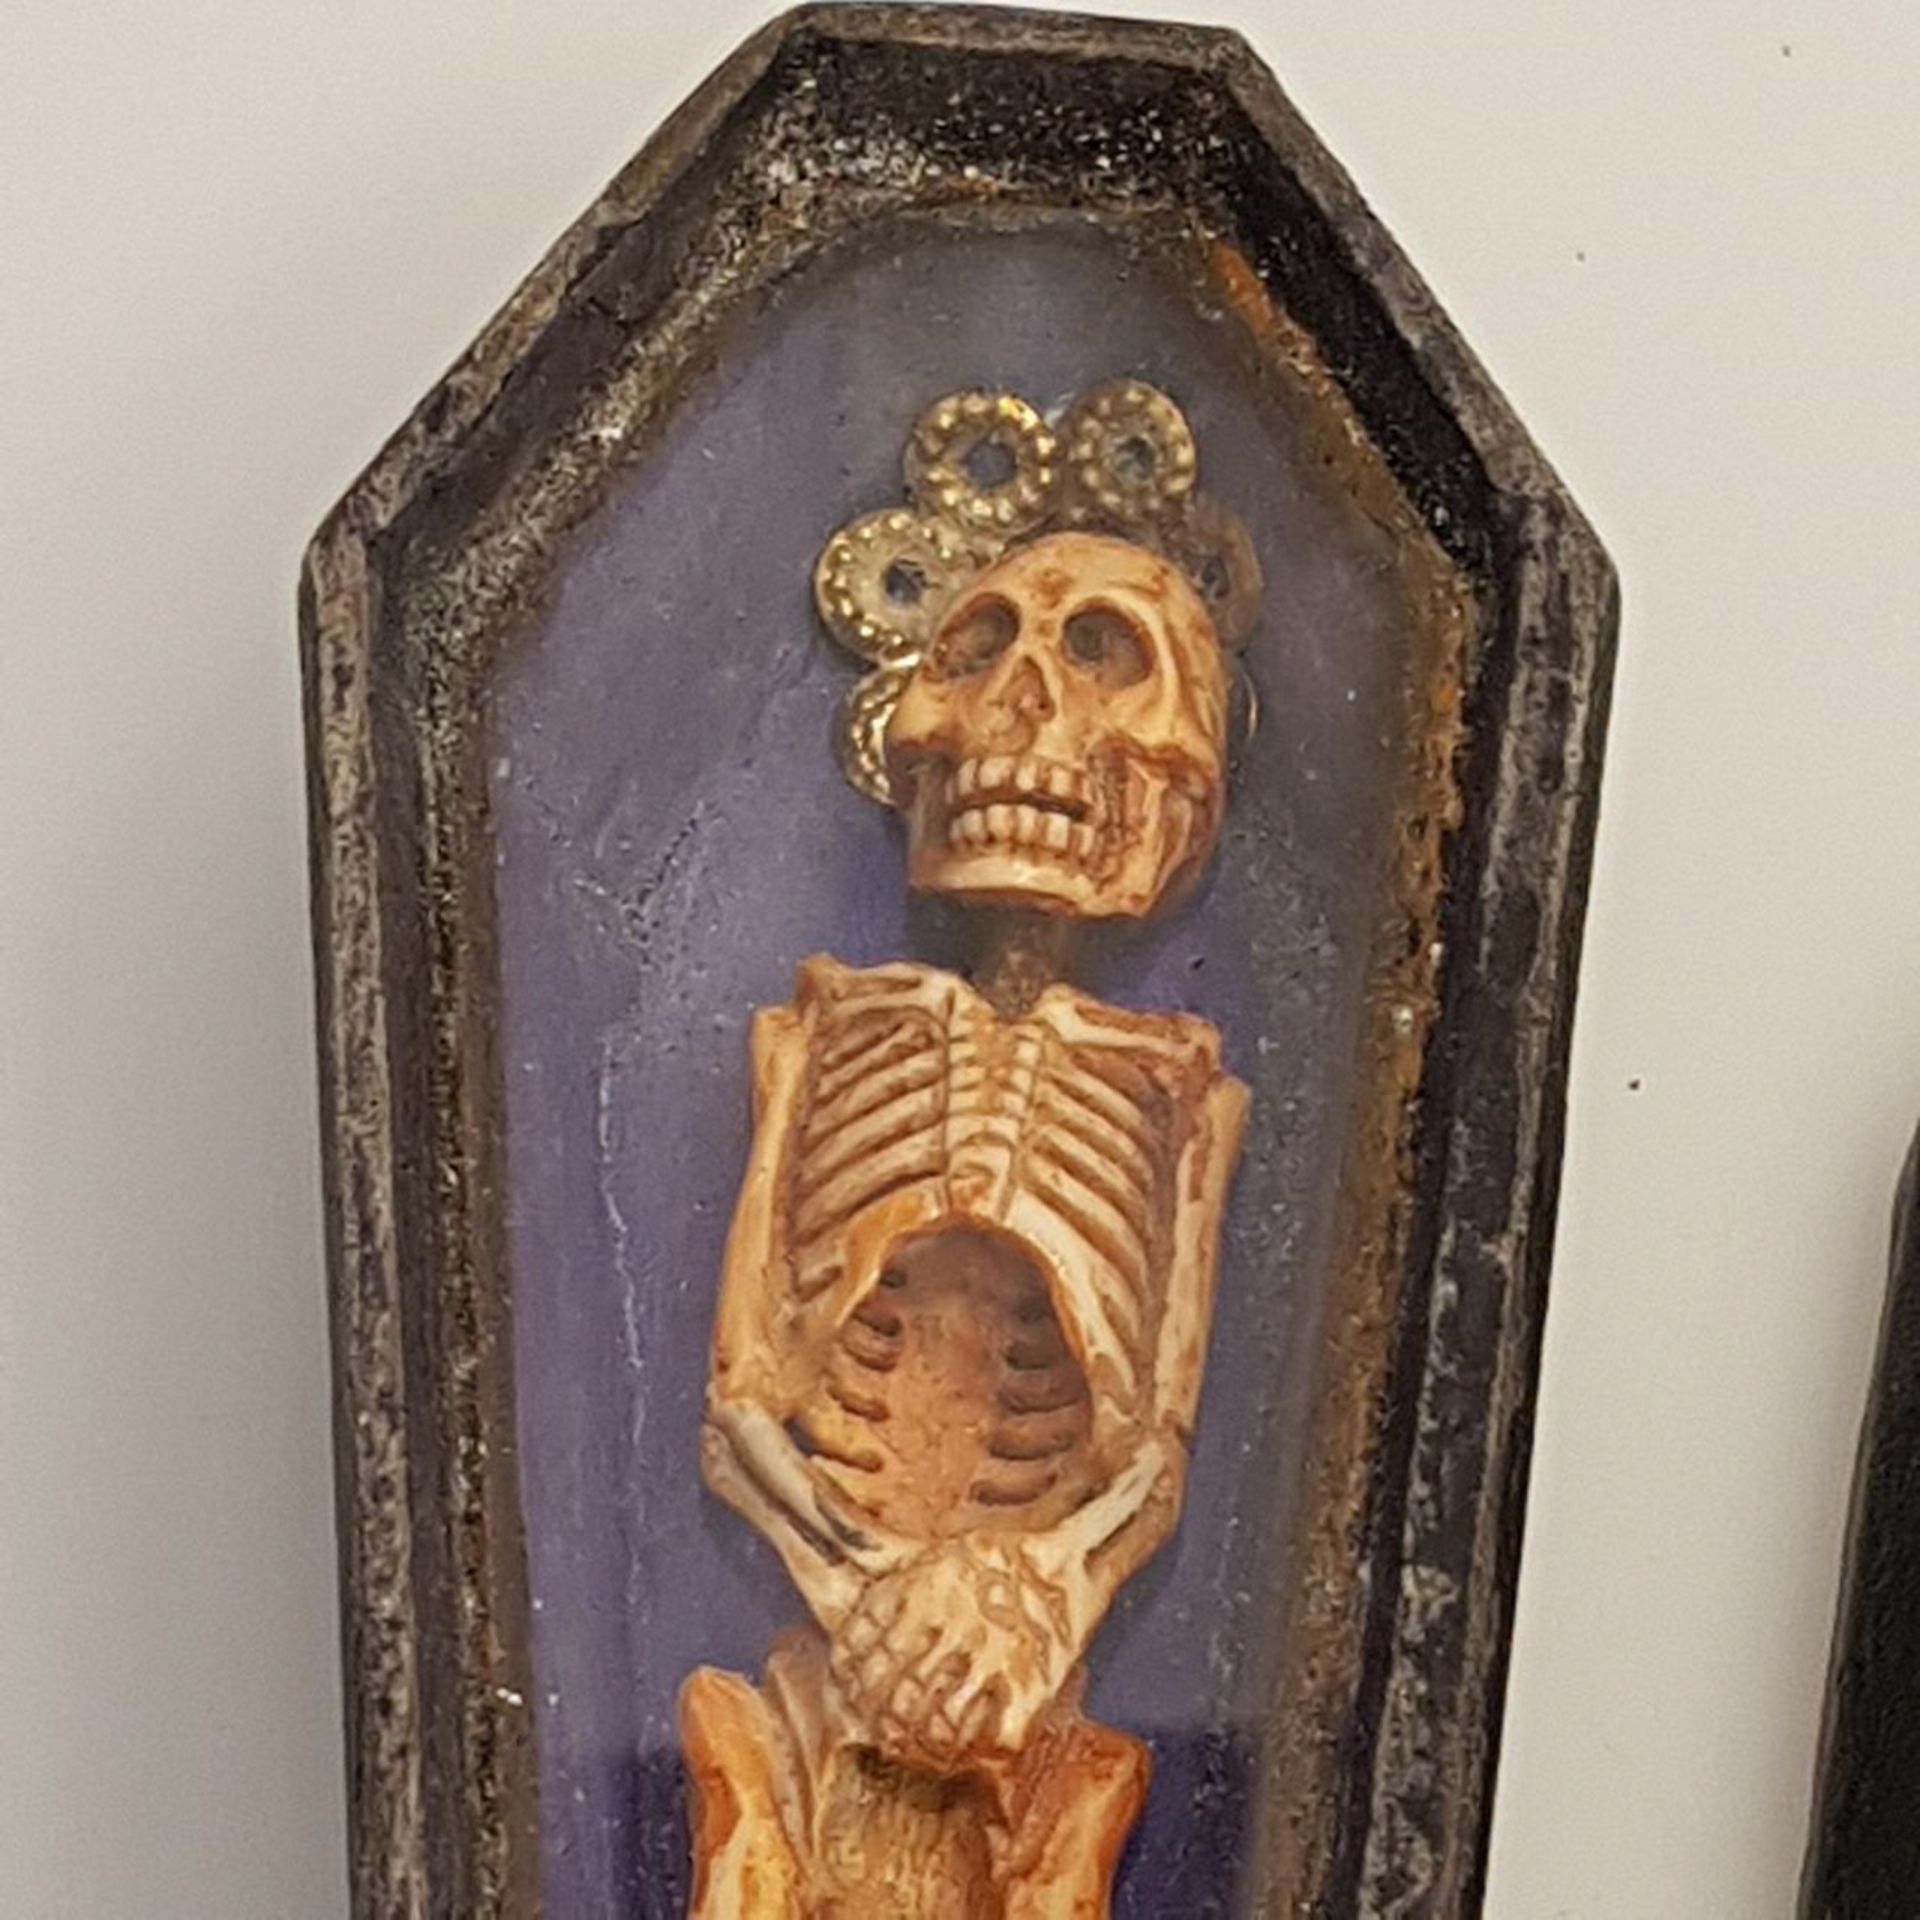 Skelett im Sarg, dat. 1857, L: 29 cm, Horn, Memento mori, selten/museal - Bild 3 aus 4